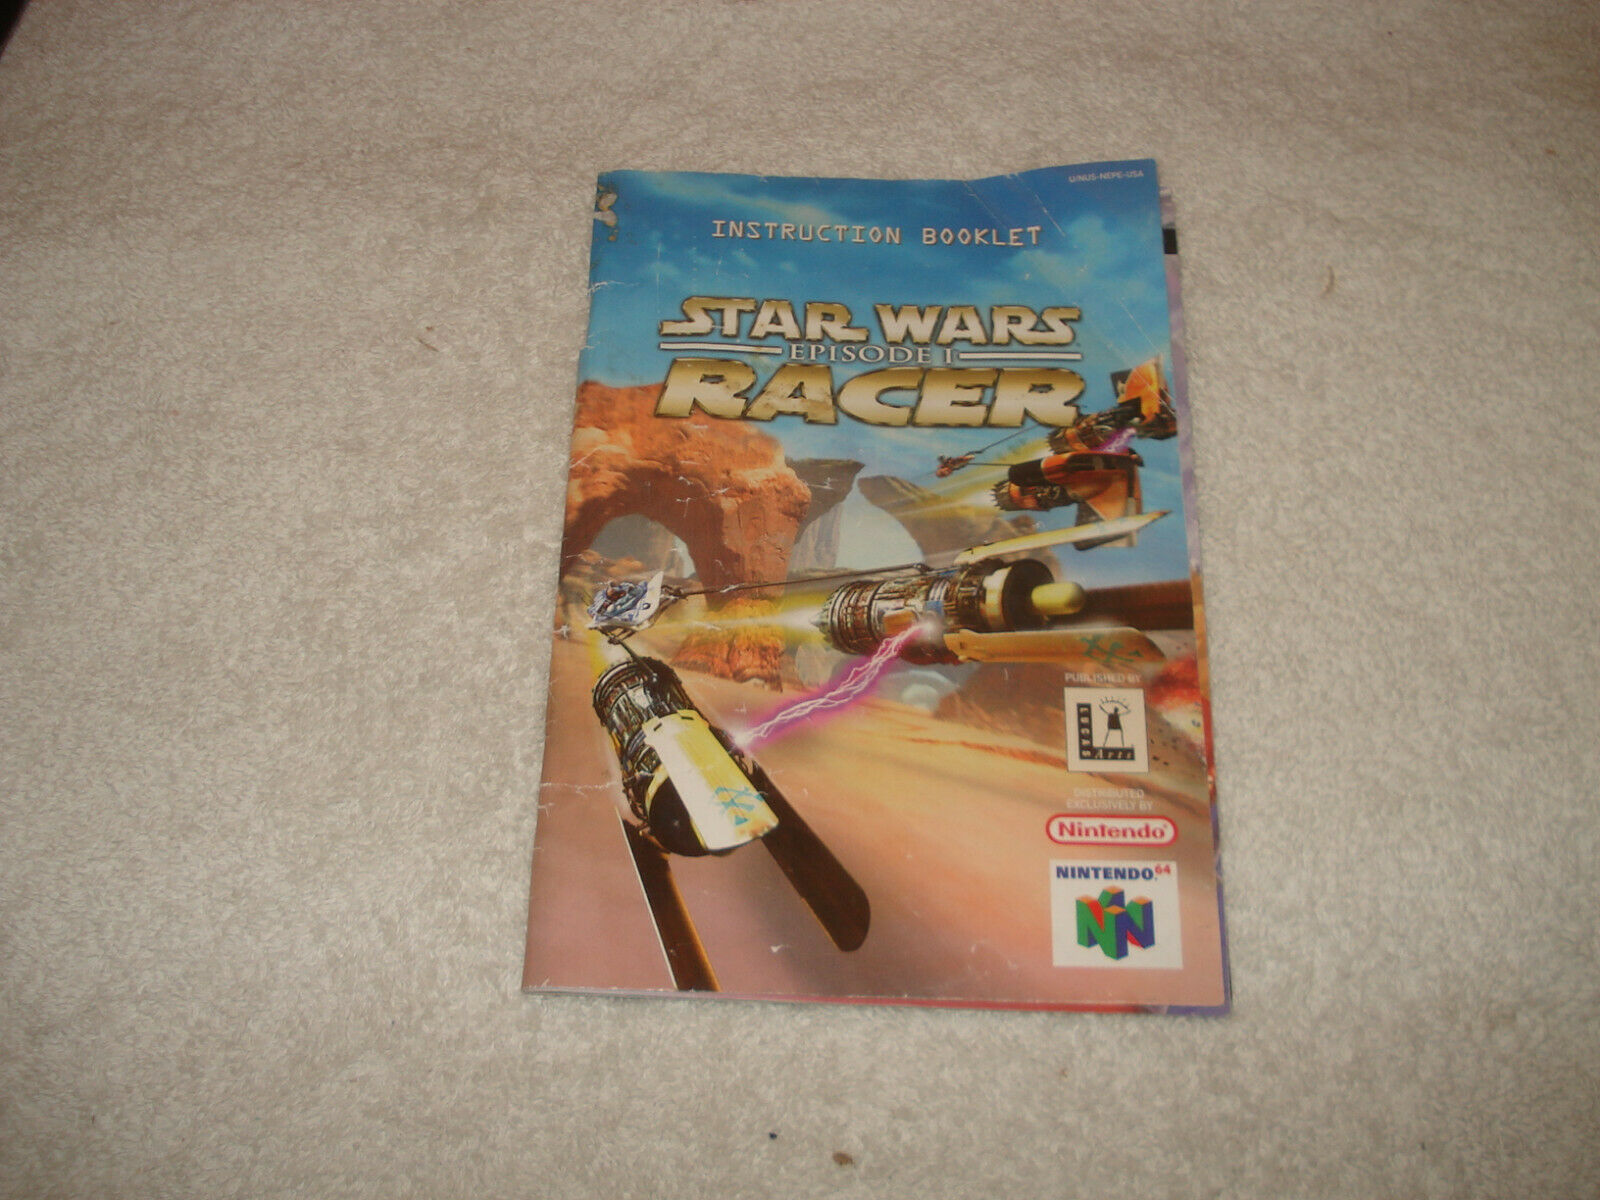 Primary image for Star Wars Racer Episode I Manual only Nintendo N64 Instruction Booklet